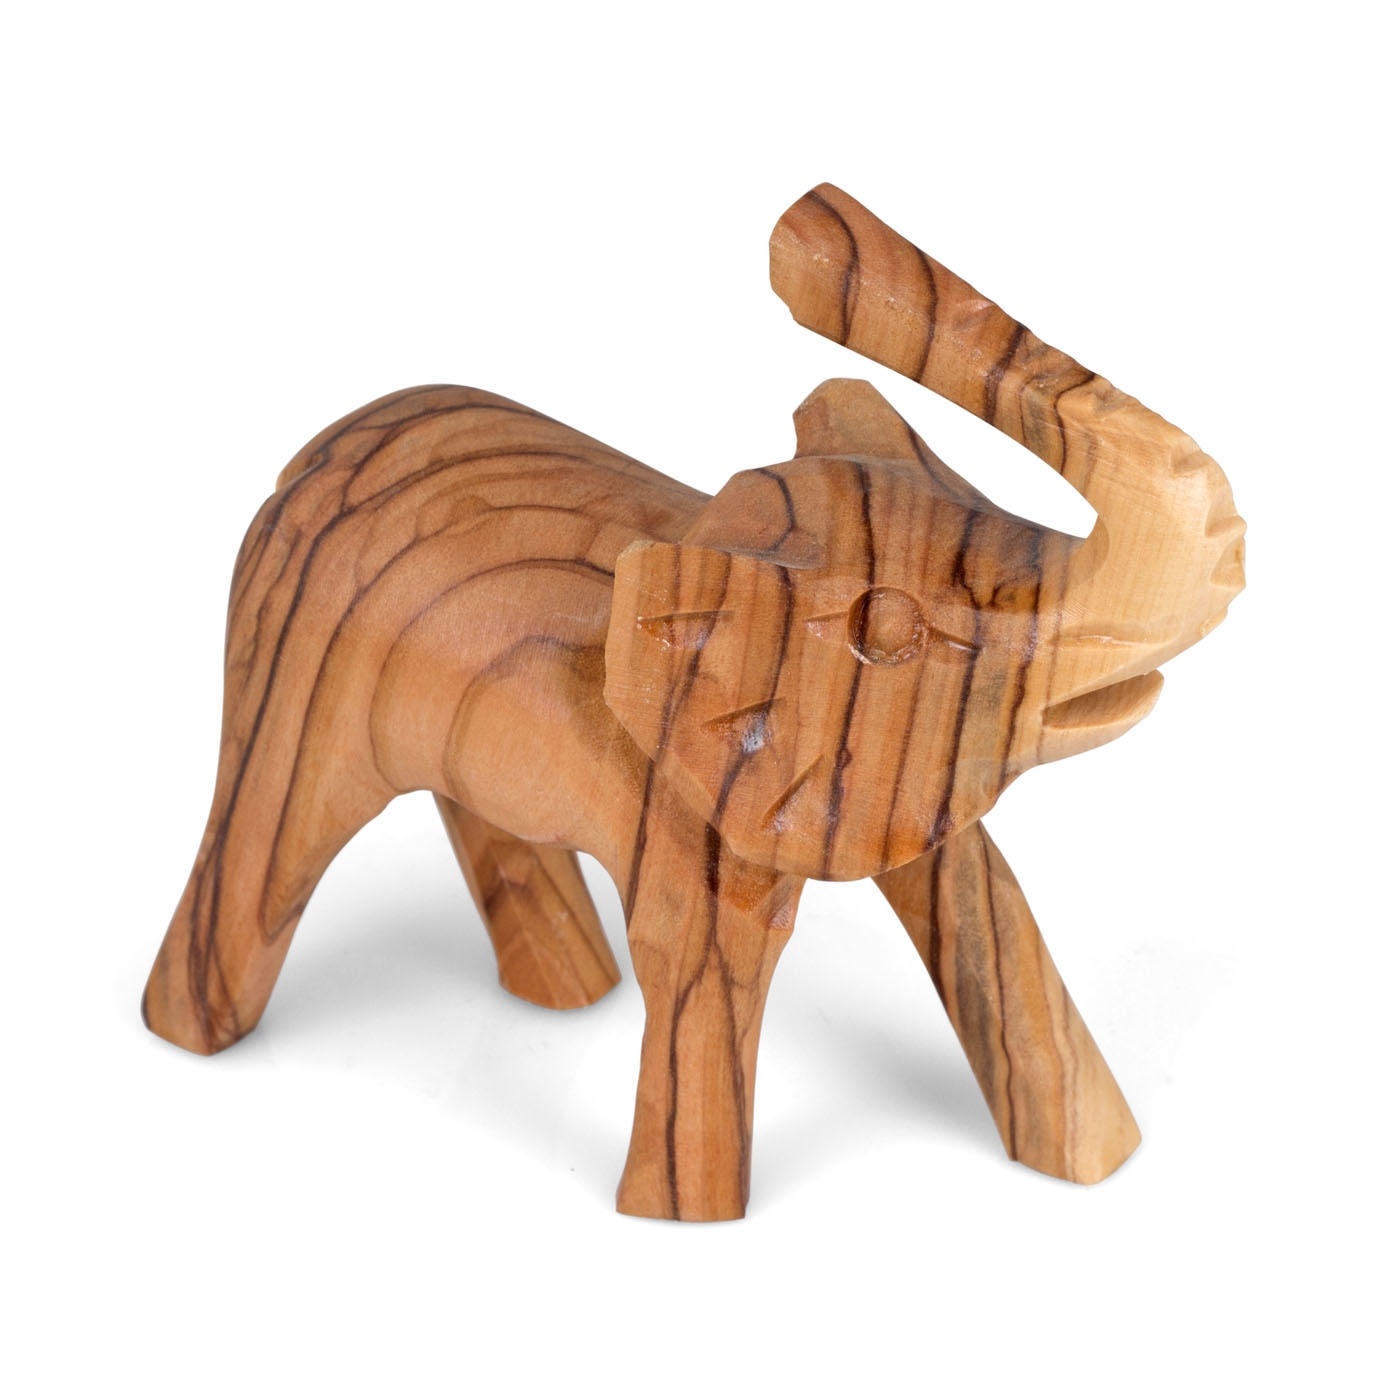 Olive Wood Elephant Figurine - Small - 1